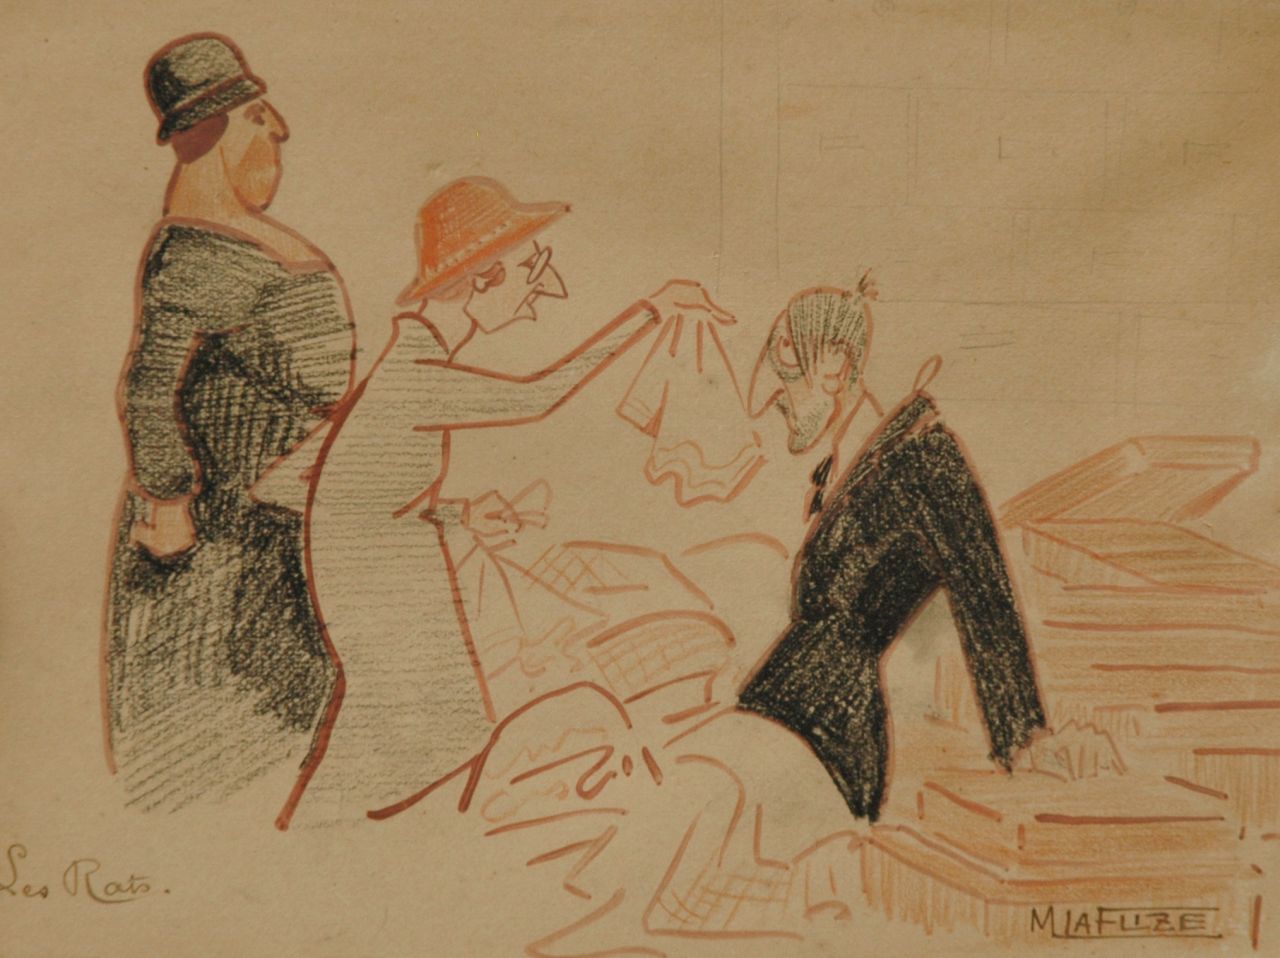 Flize M. la | Maurice la Flize, De graaisters, krijt en aquarel op papier 17,4 x 23,9 cm, gesigneerd rechtsonder